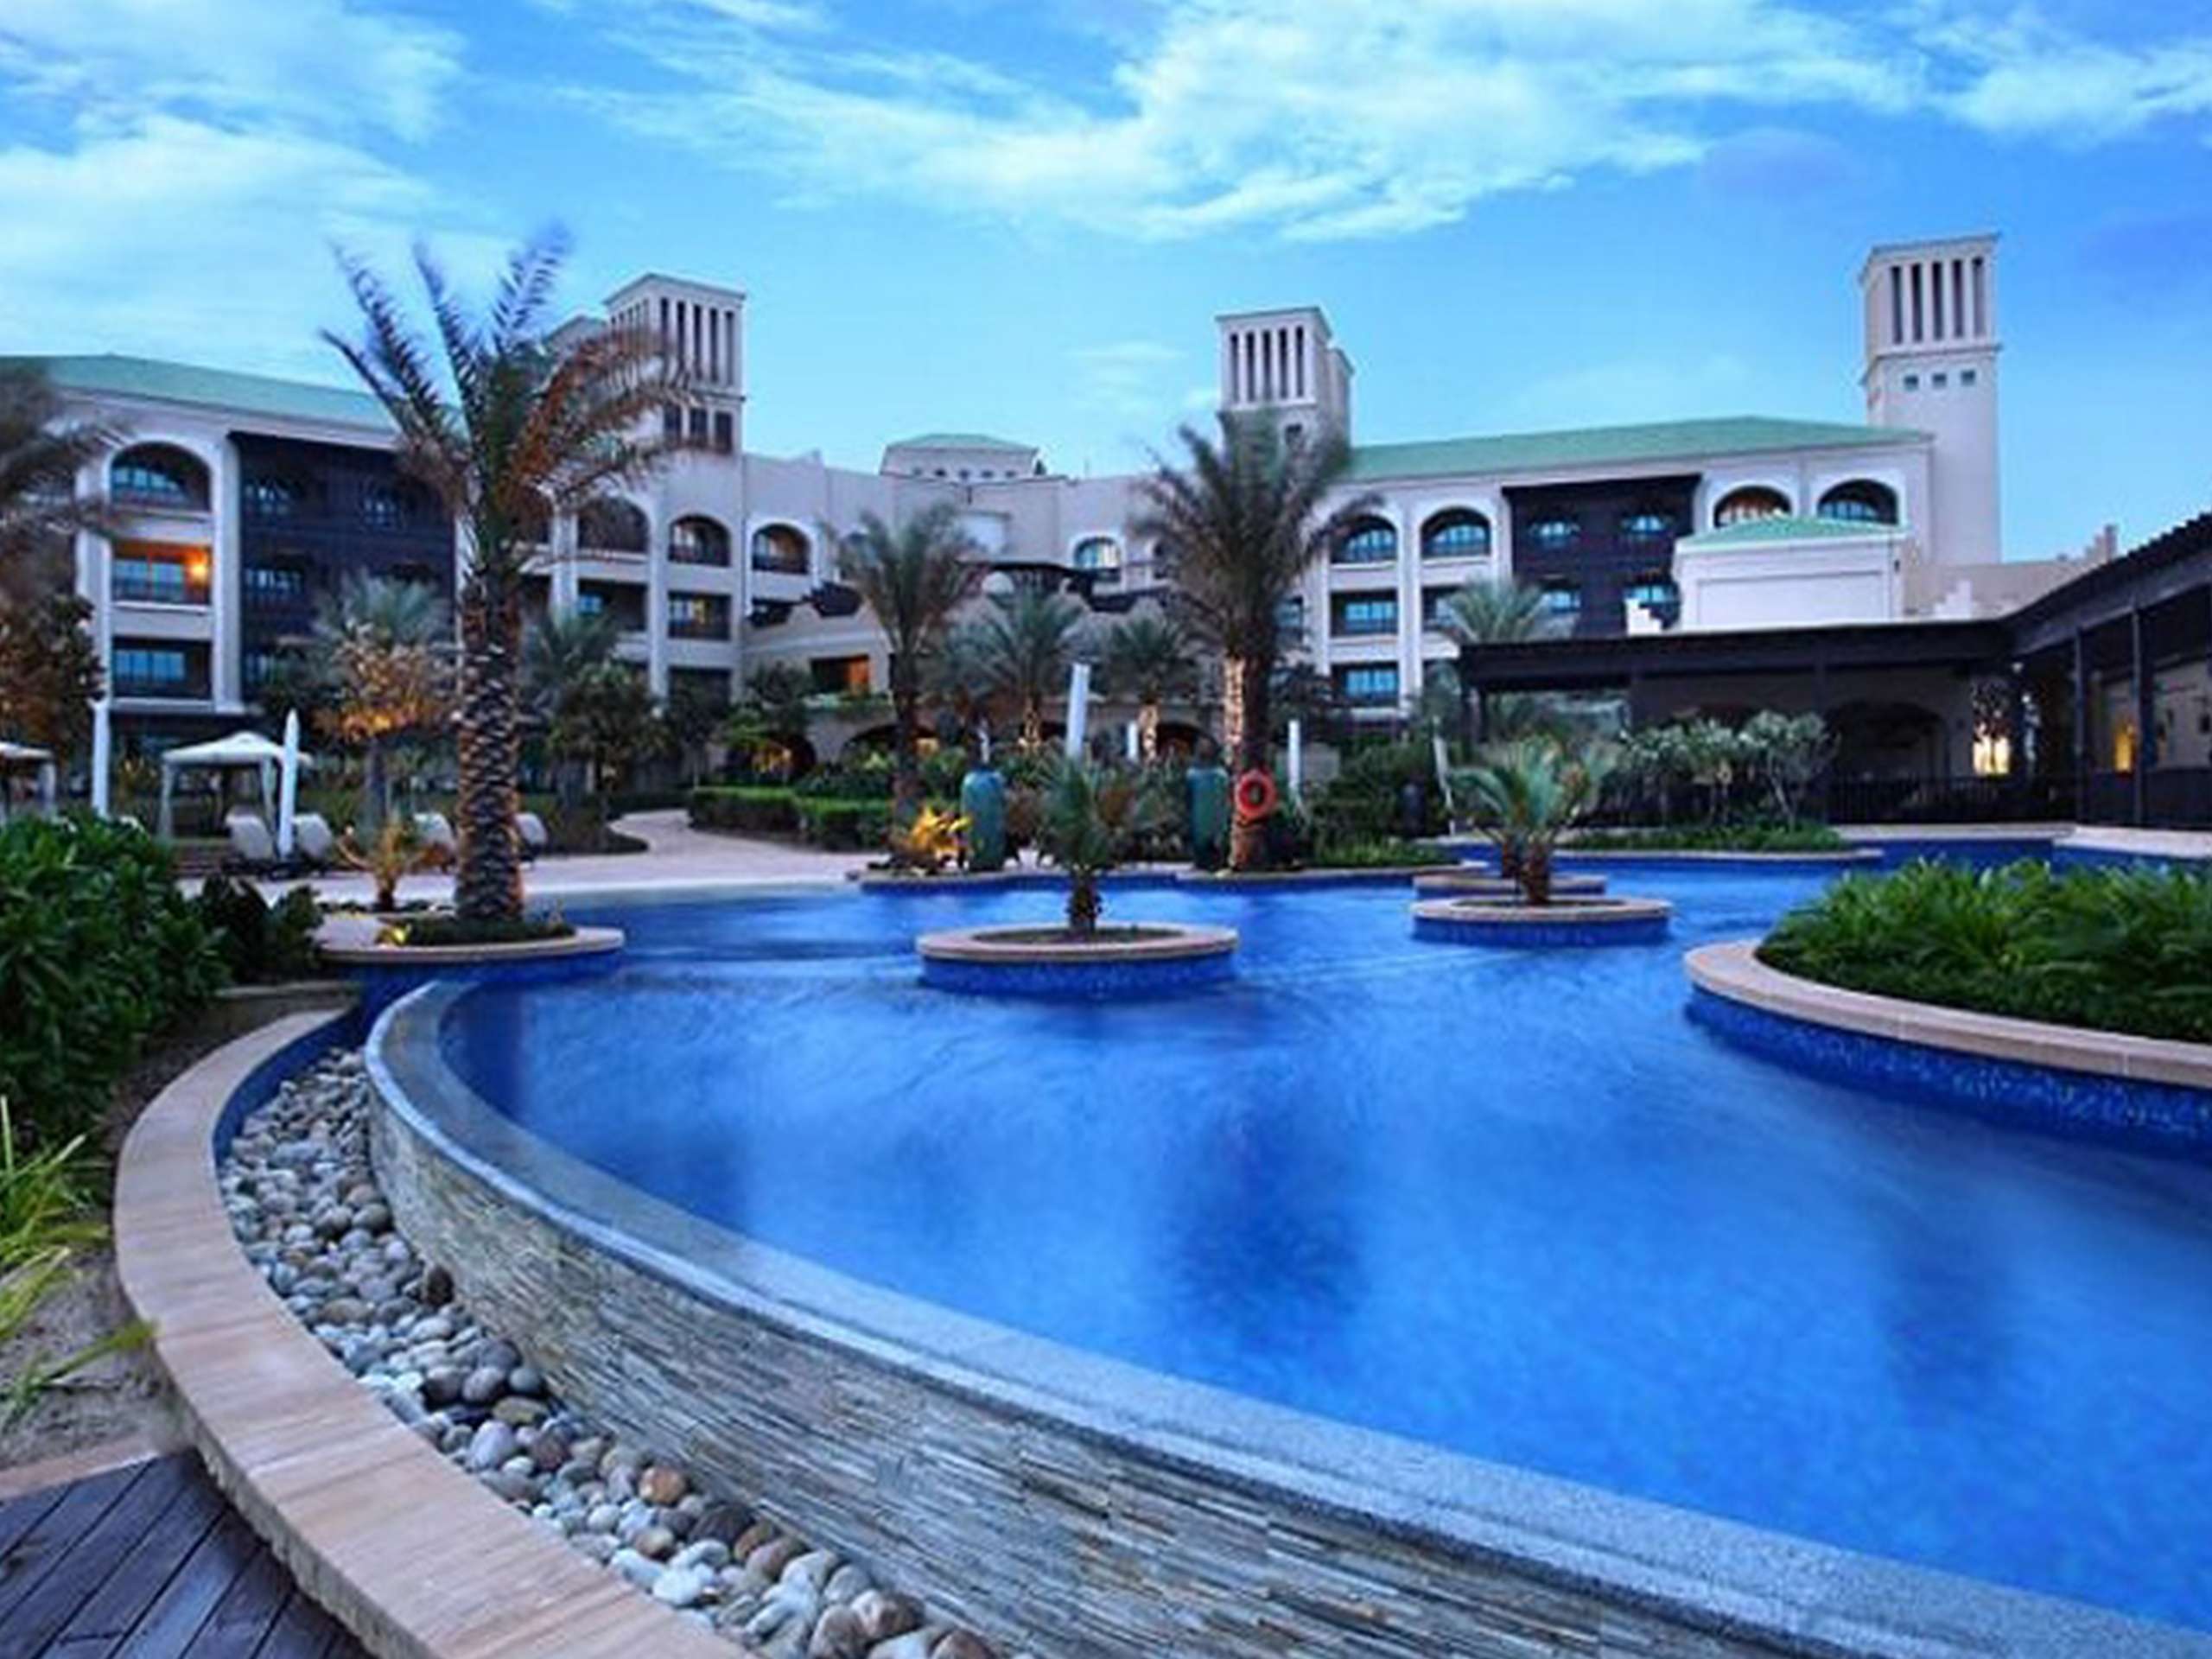 Zodiac pools Dubai